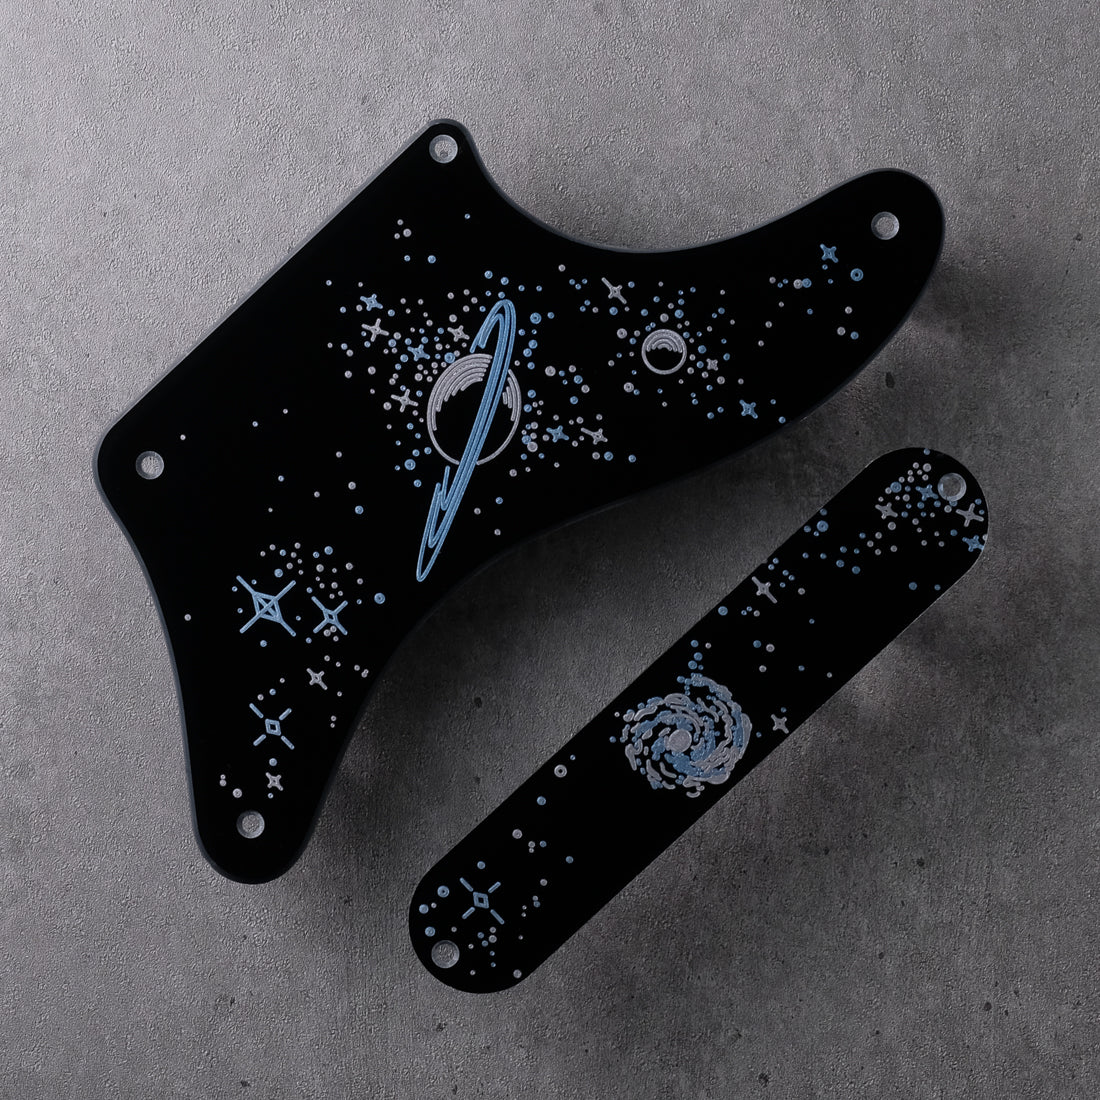 Space Oddity - Cabronita Especial Pickguard - on Black Plexi